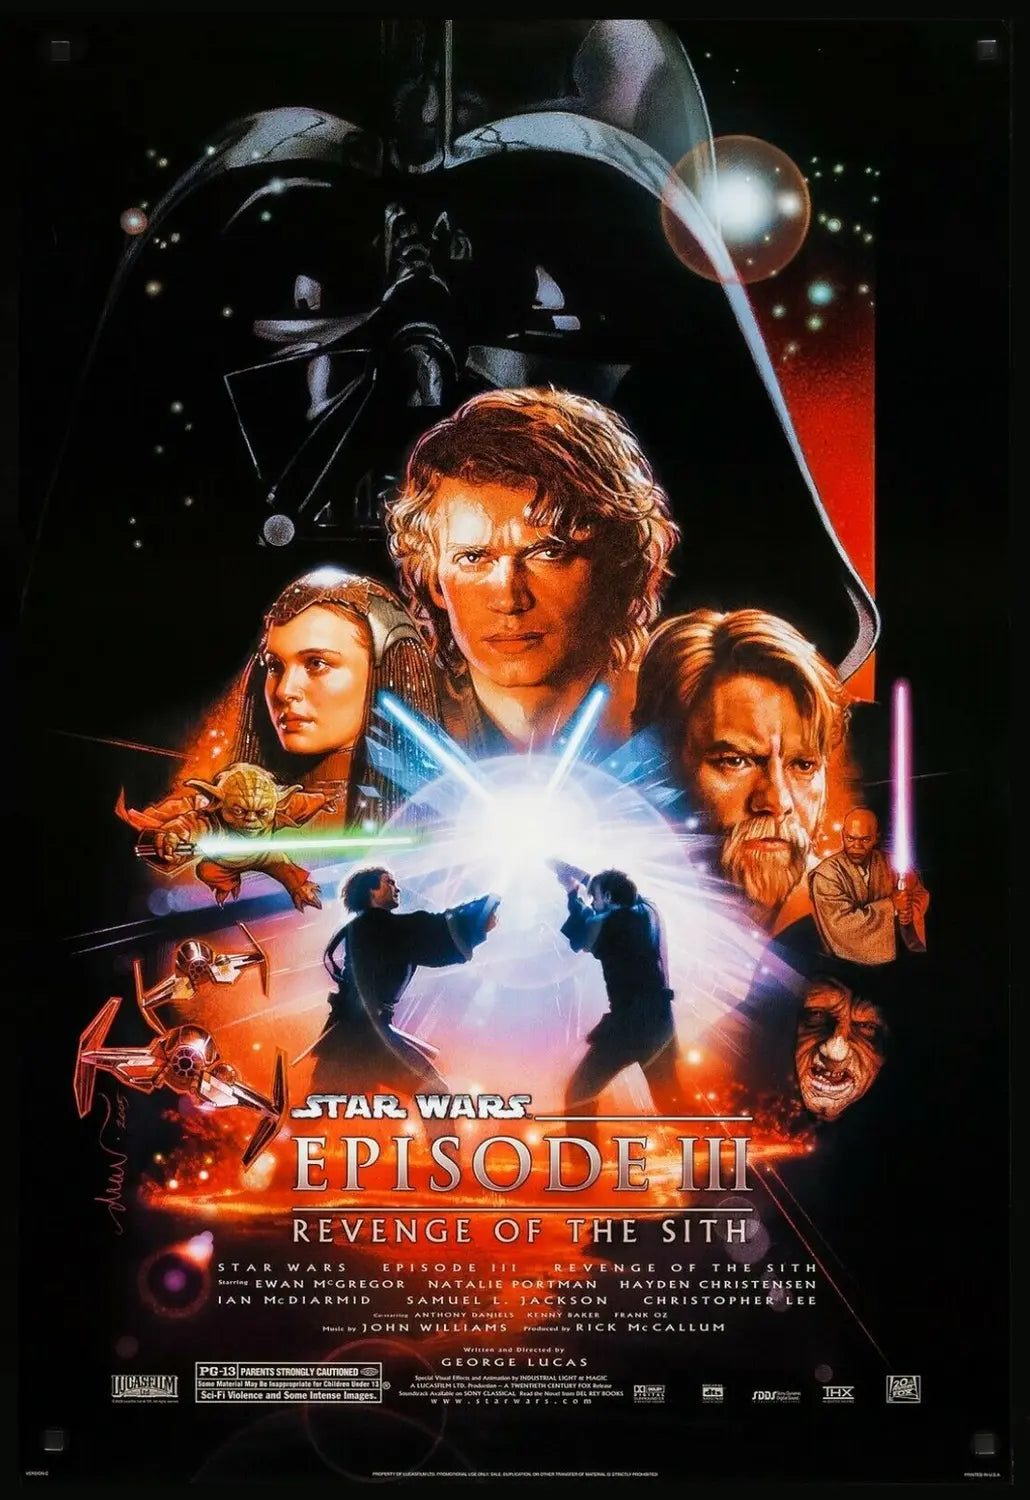 Star Wars: Episode III - Revenge of the Sith (2005) original movie poster for sale at Original Film Art